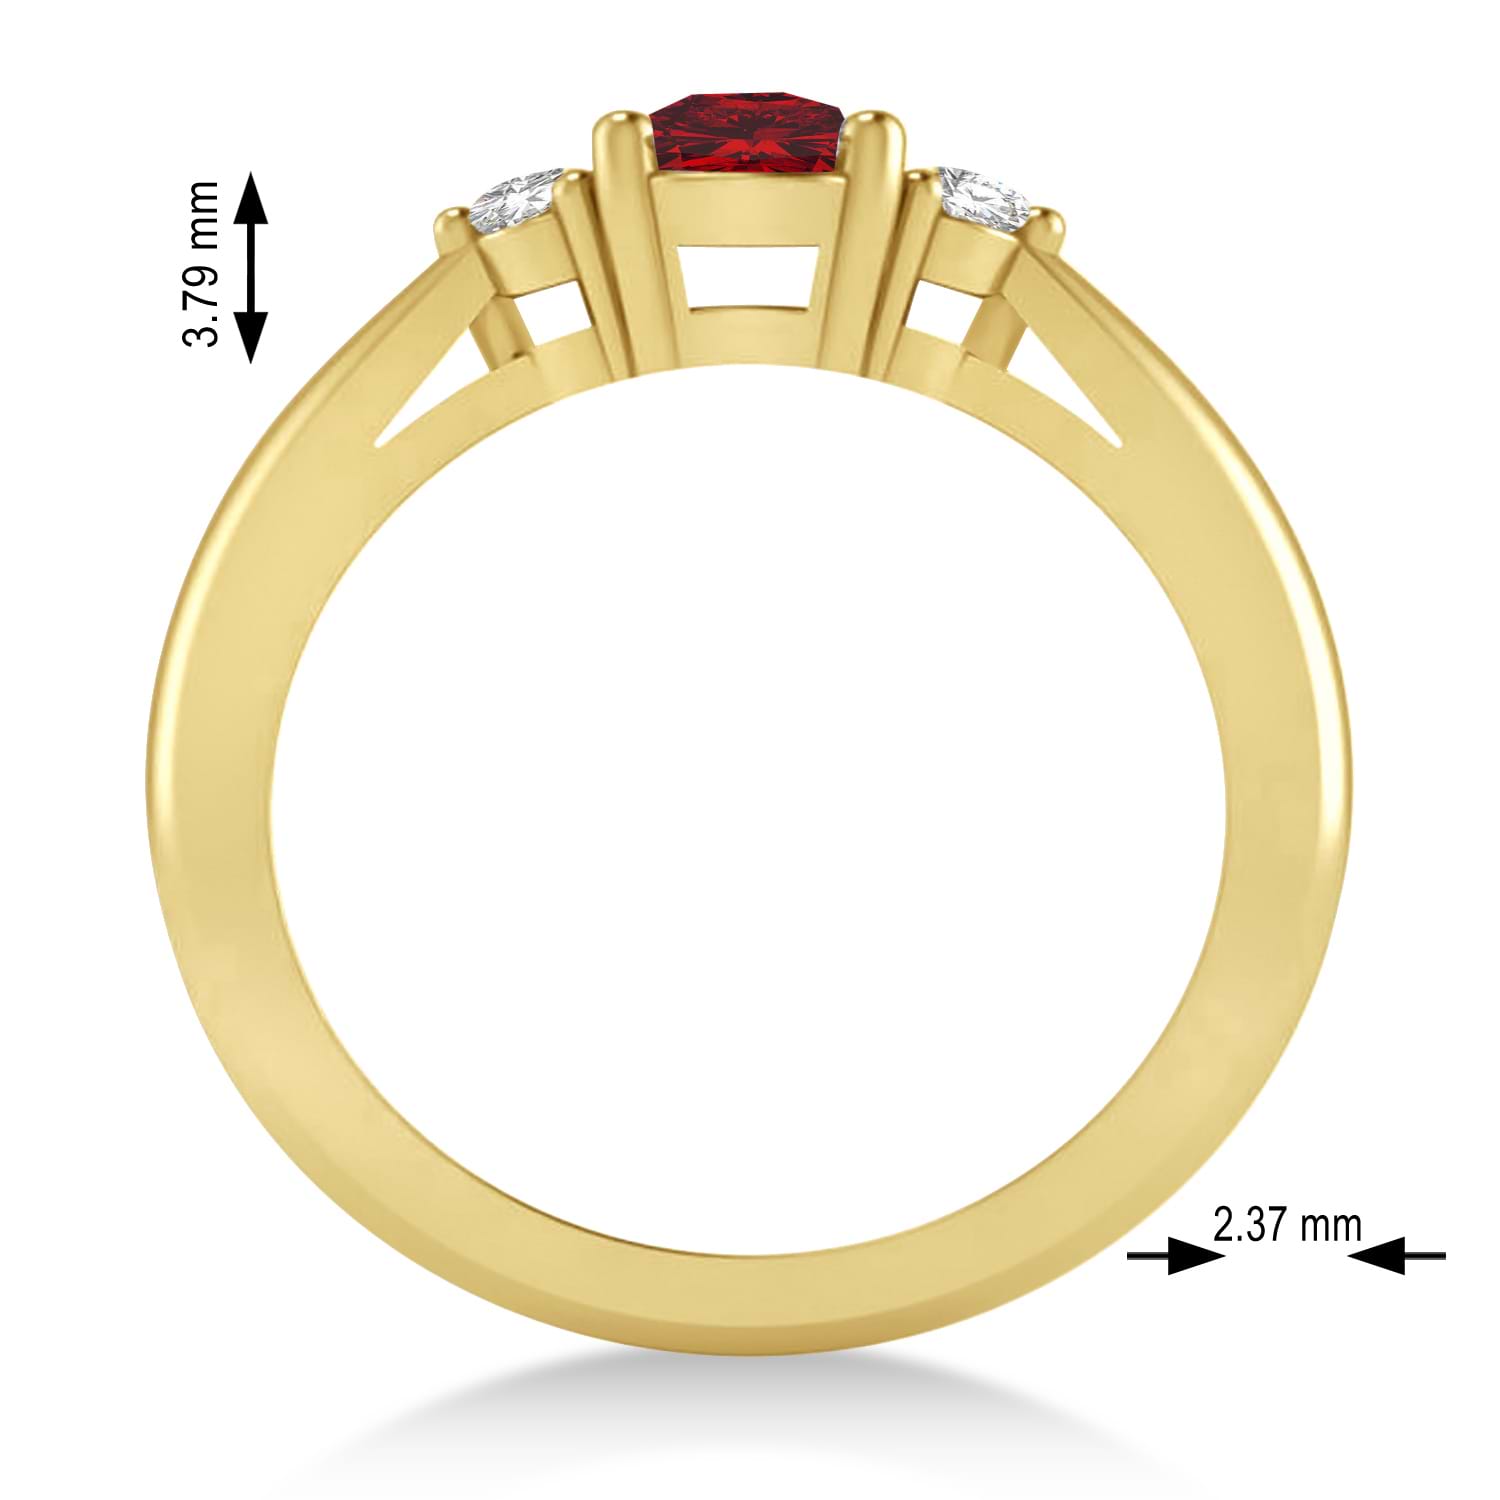 Cushion Ruby & Diamond Three-Stone Engagement Ring 14k Yellow Gold (1.14ct)